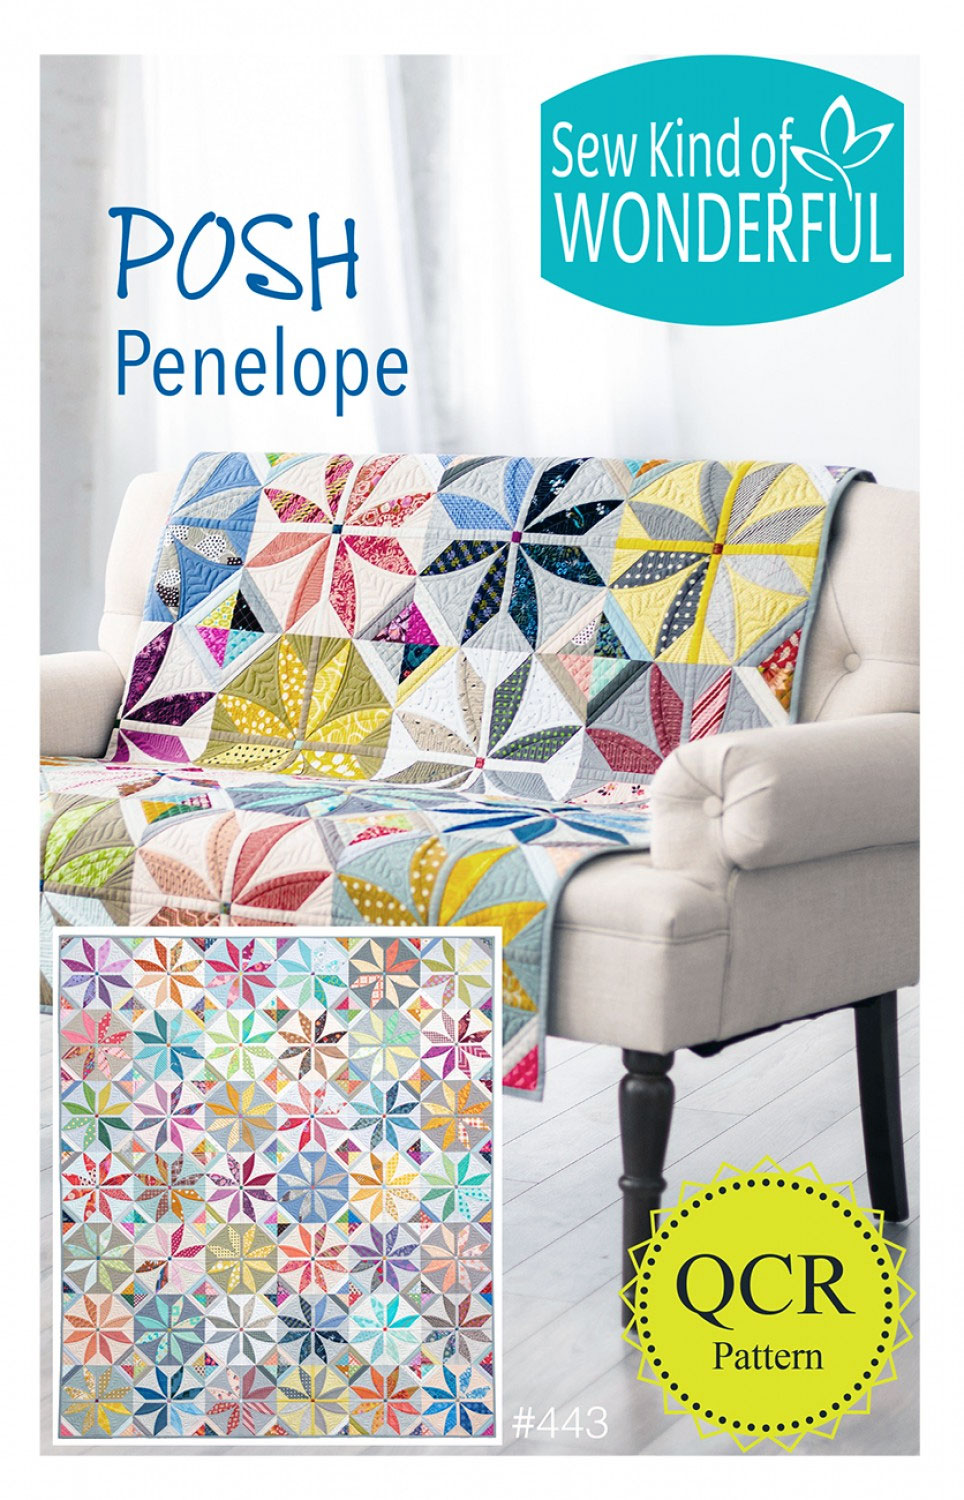 Posh-Penelope-sewing-pattern-sew-kind-of-wonderful-front